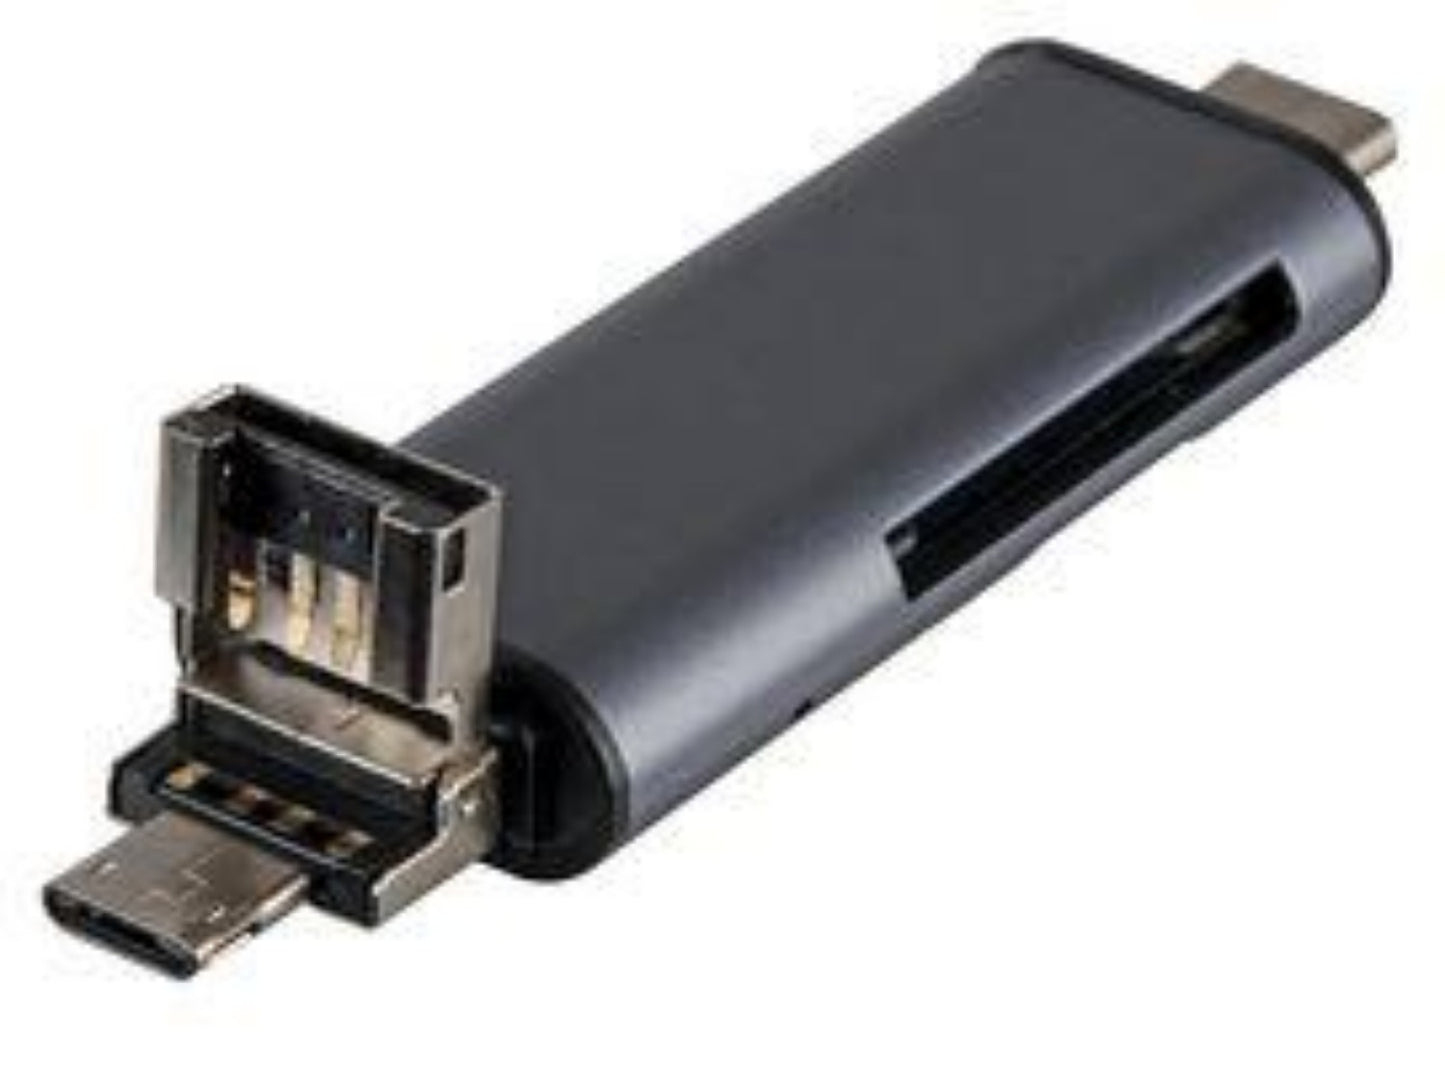 Versatile USB Type-C adapter